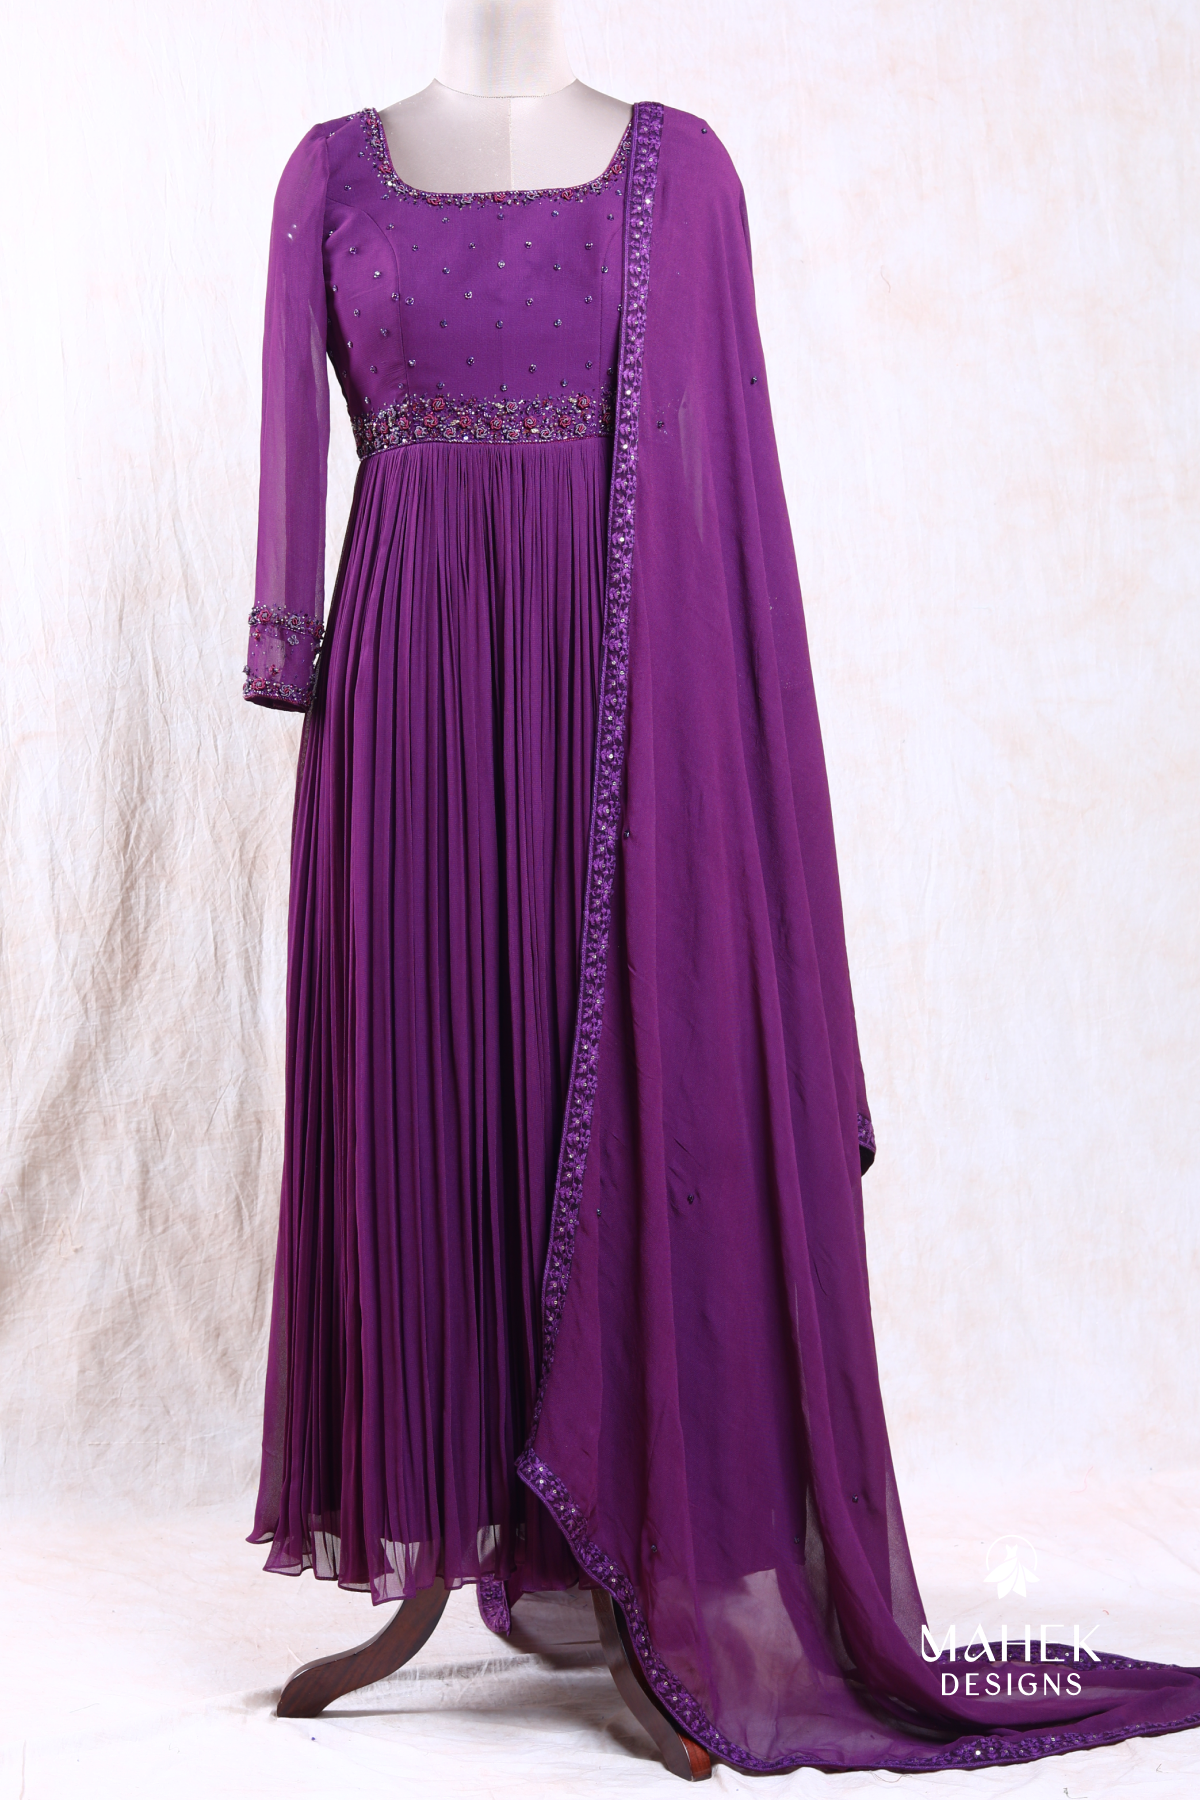 yhfshop Women's Elegant Ball Evening Gowns,Long tulle elegant party dress- Grape purple_38,Long Evening Dress : Amazon.co.uk: Fashion